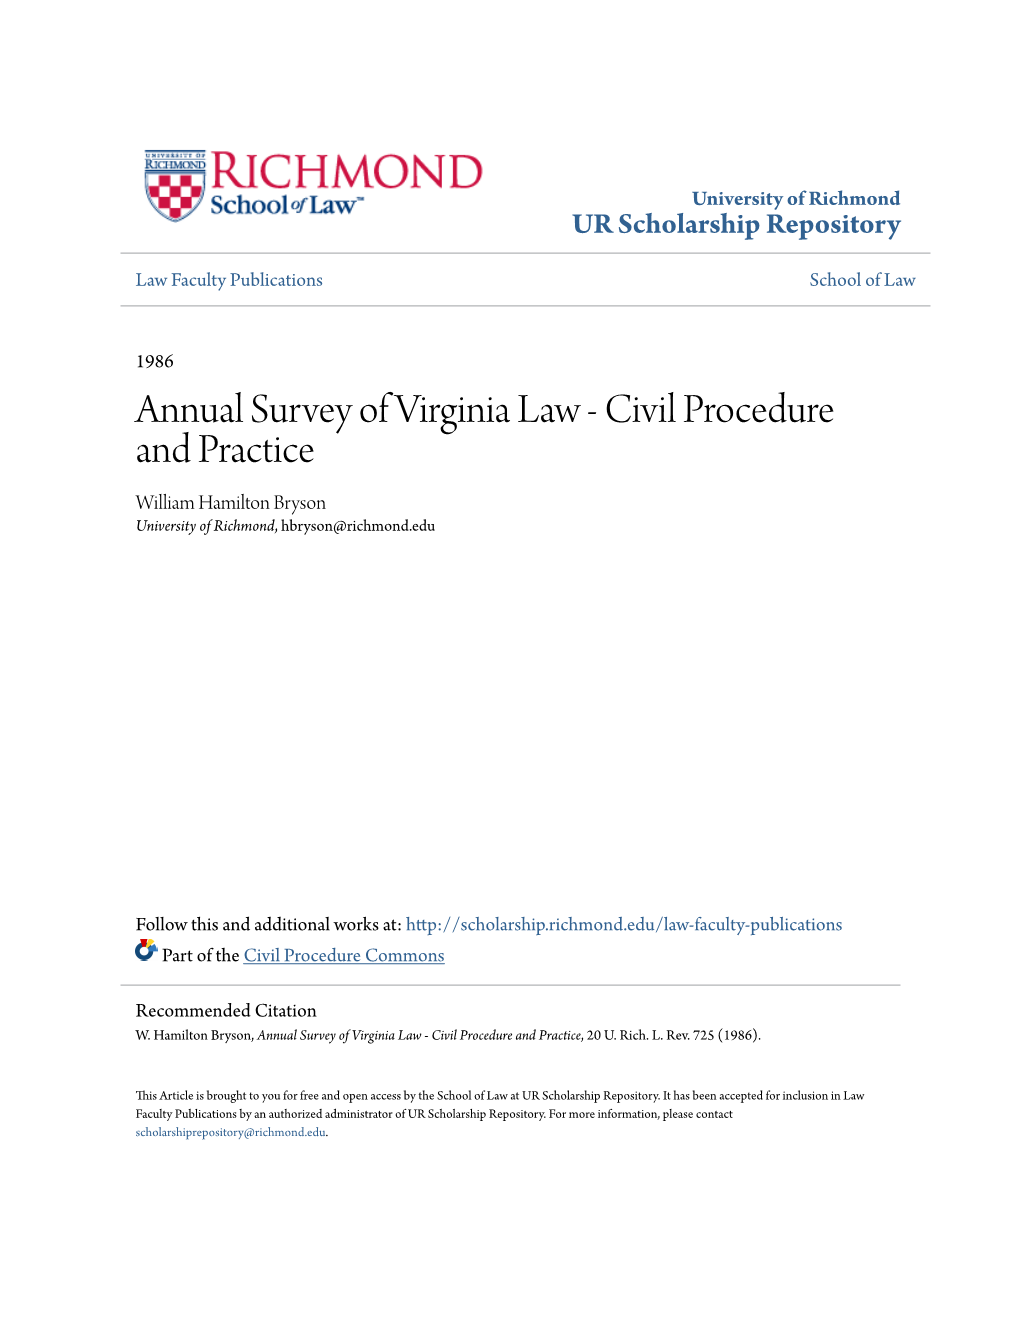 Annual Survey of Virginia Law - Civil Procedure and Practice William Hamilton Bryson University of Richmond, Hbryson@Richmond.Edu